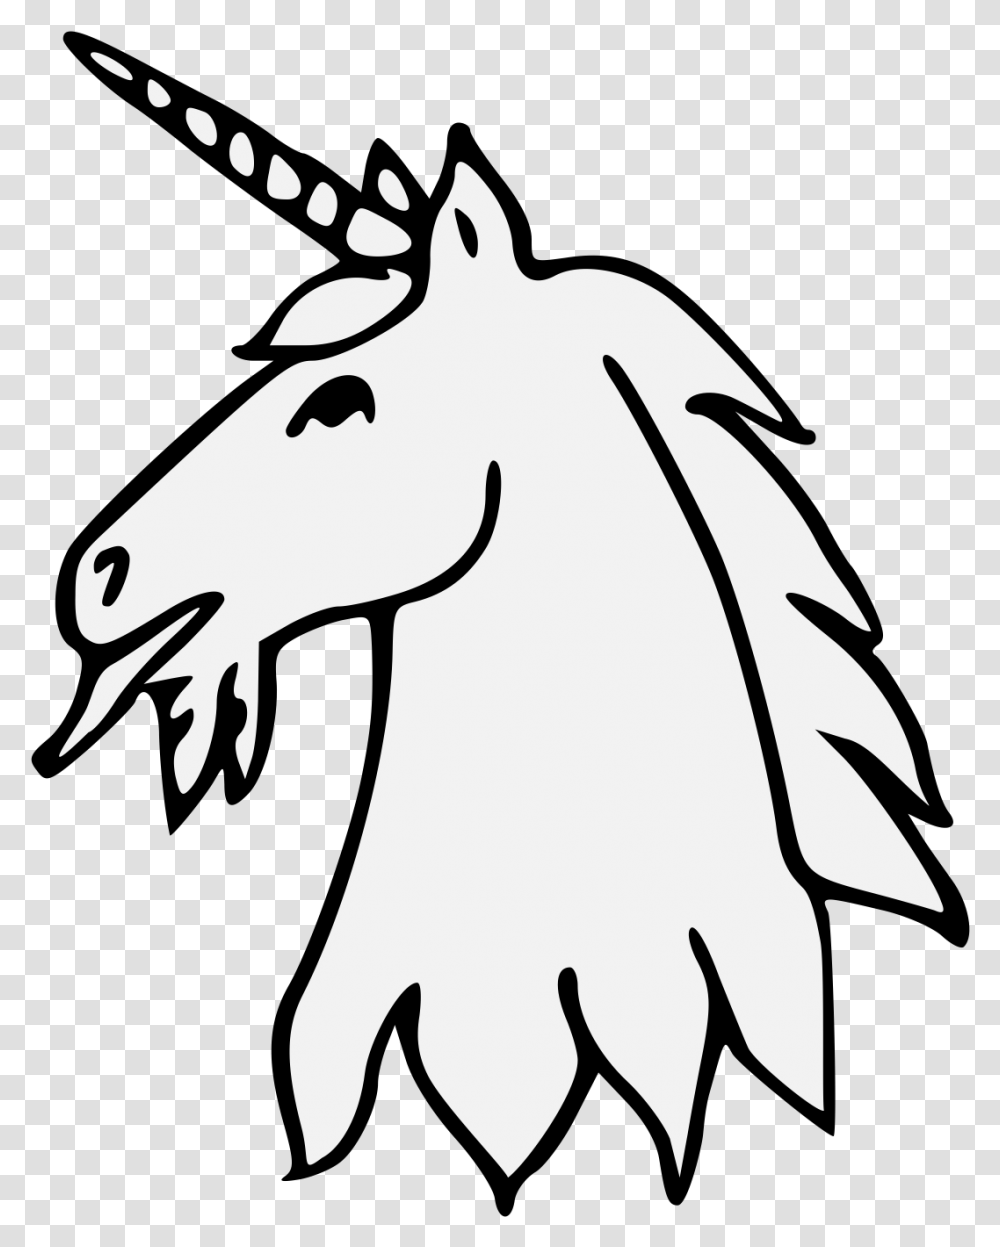 Download Unicorn's Head Erased Unicorn Image With No Unicorn Head Line Art, Mammal, Animal, Wildlife, Elephant Transparent Png